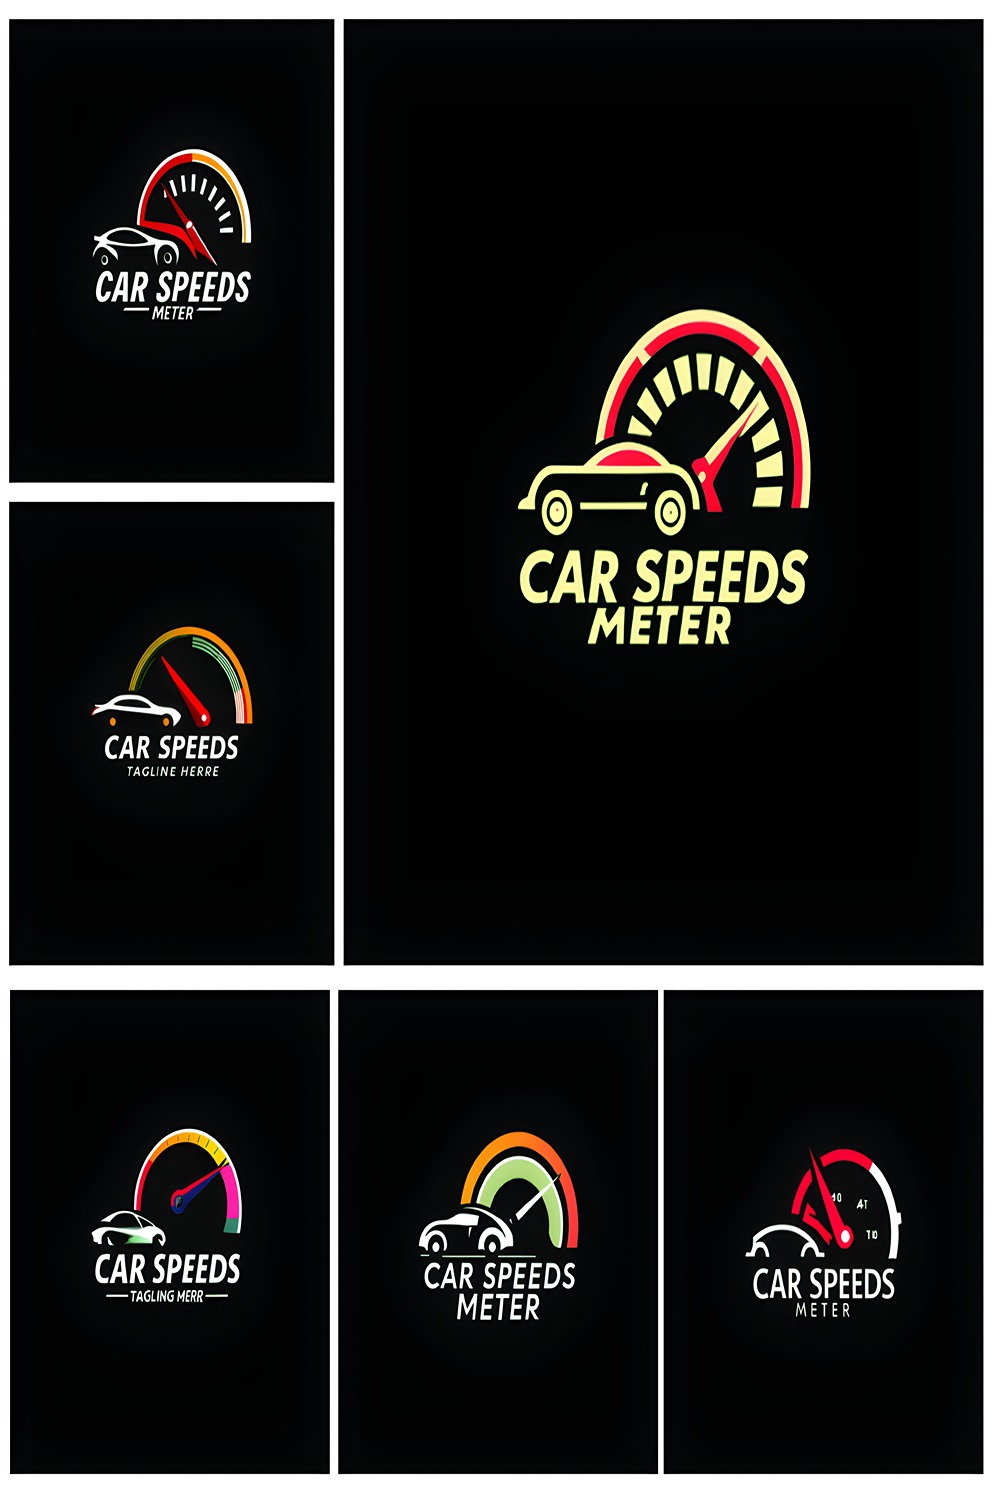 Car - Speeds Meter Logo Design Template, Car - Speeds Meter Vector Logo, Car - Speeds Meter Business Logo, Car - Speeds Meter Company Logo pinterest preview image.